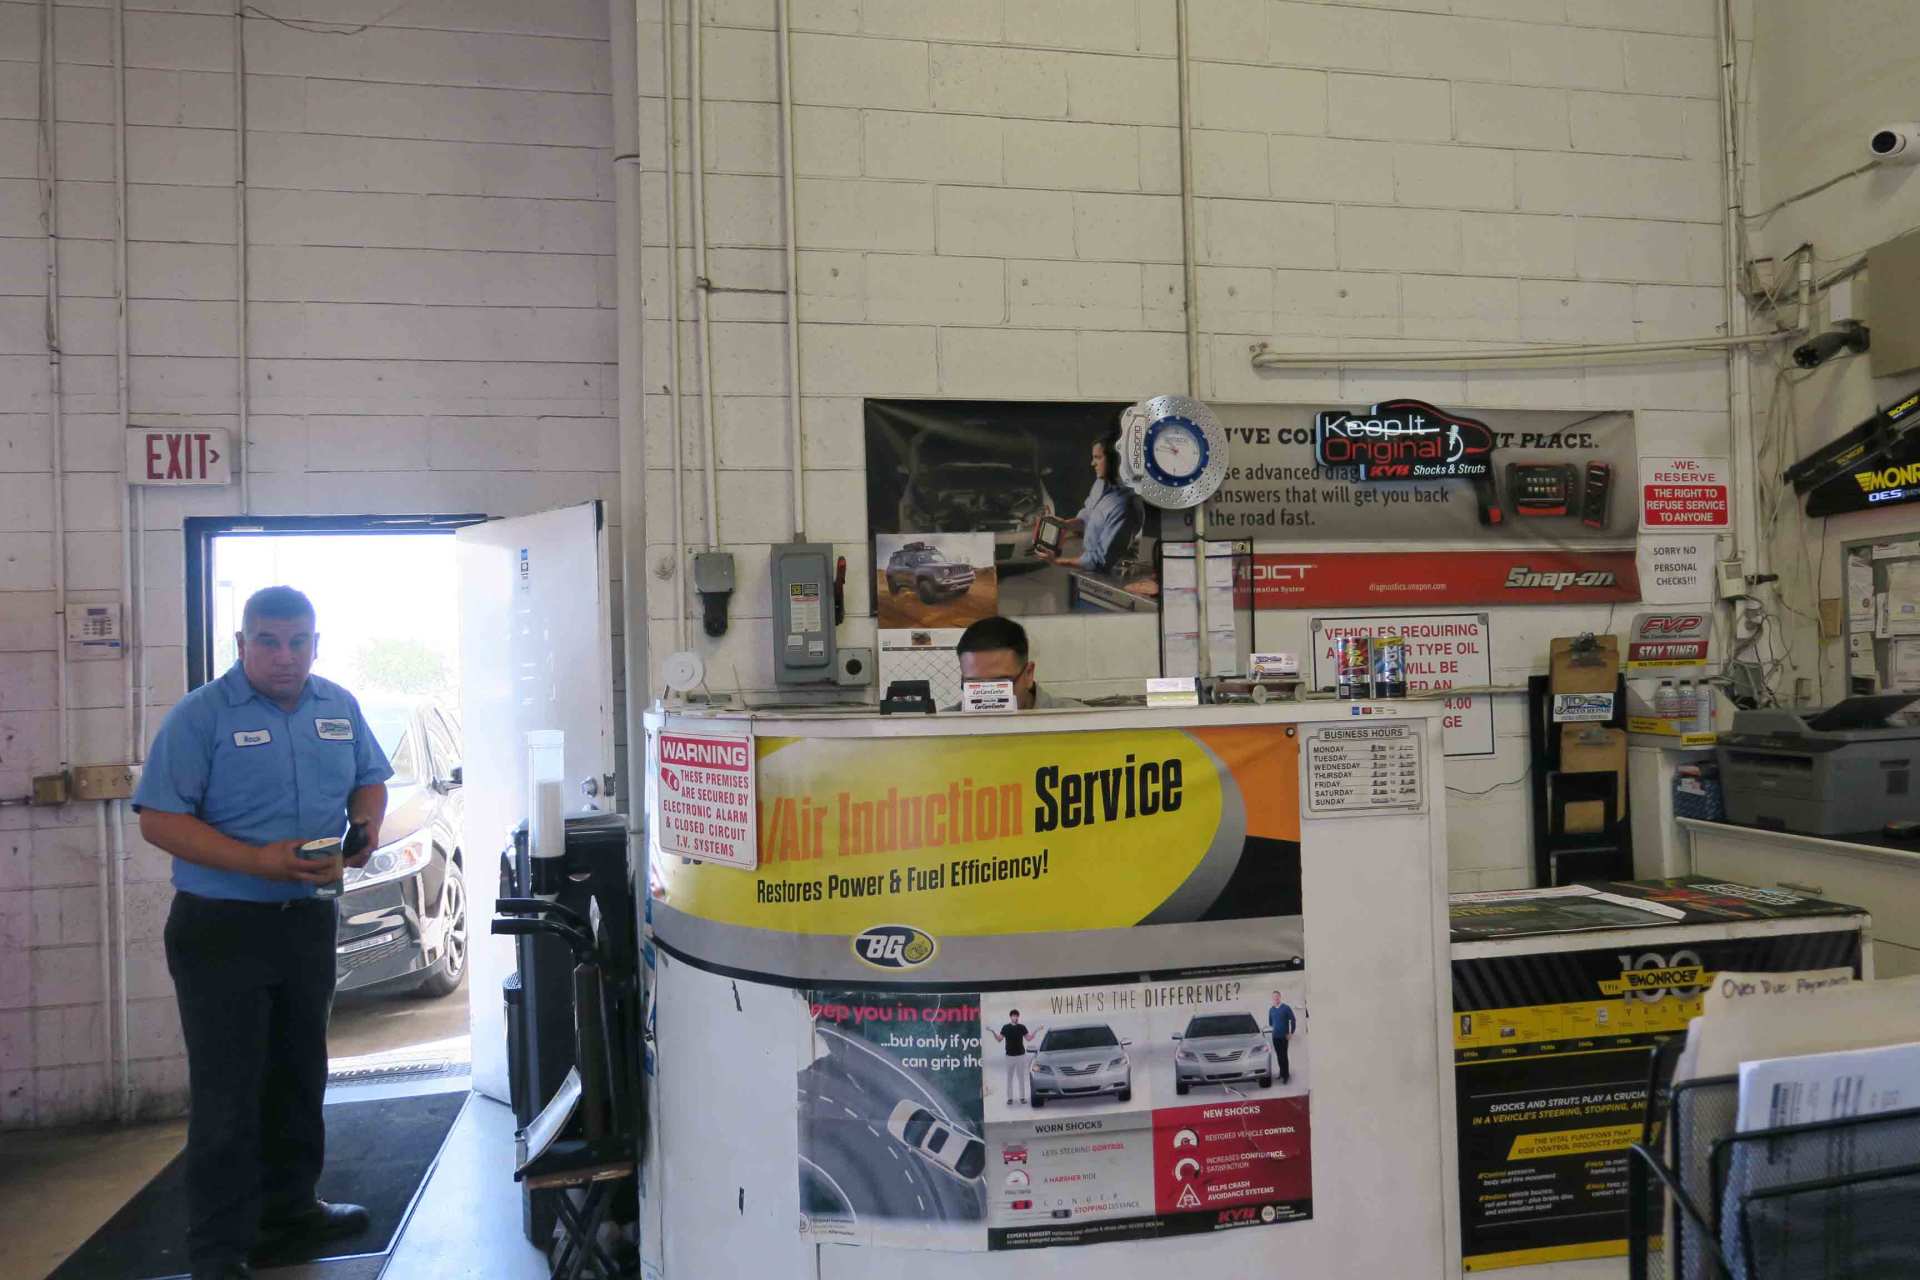 Emission Inspection — Auto Mechanic Of J D Complete Auto Repair in Ontario, California